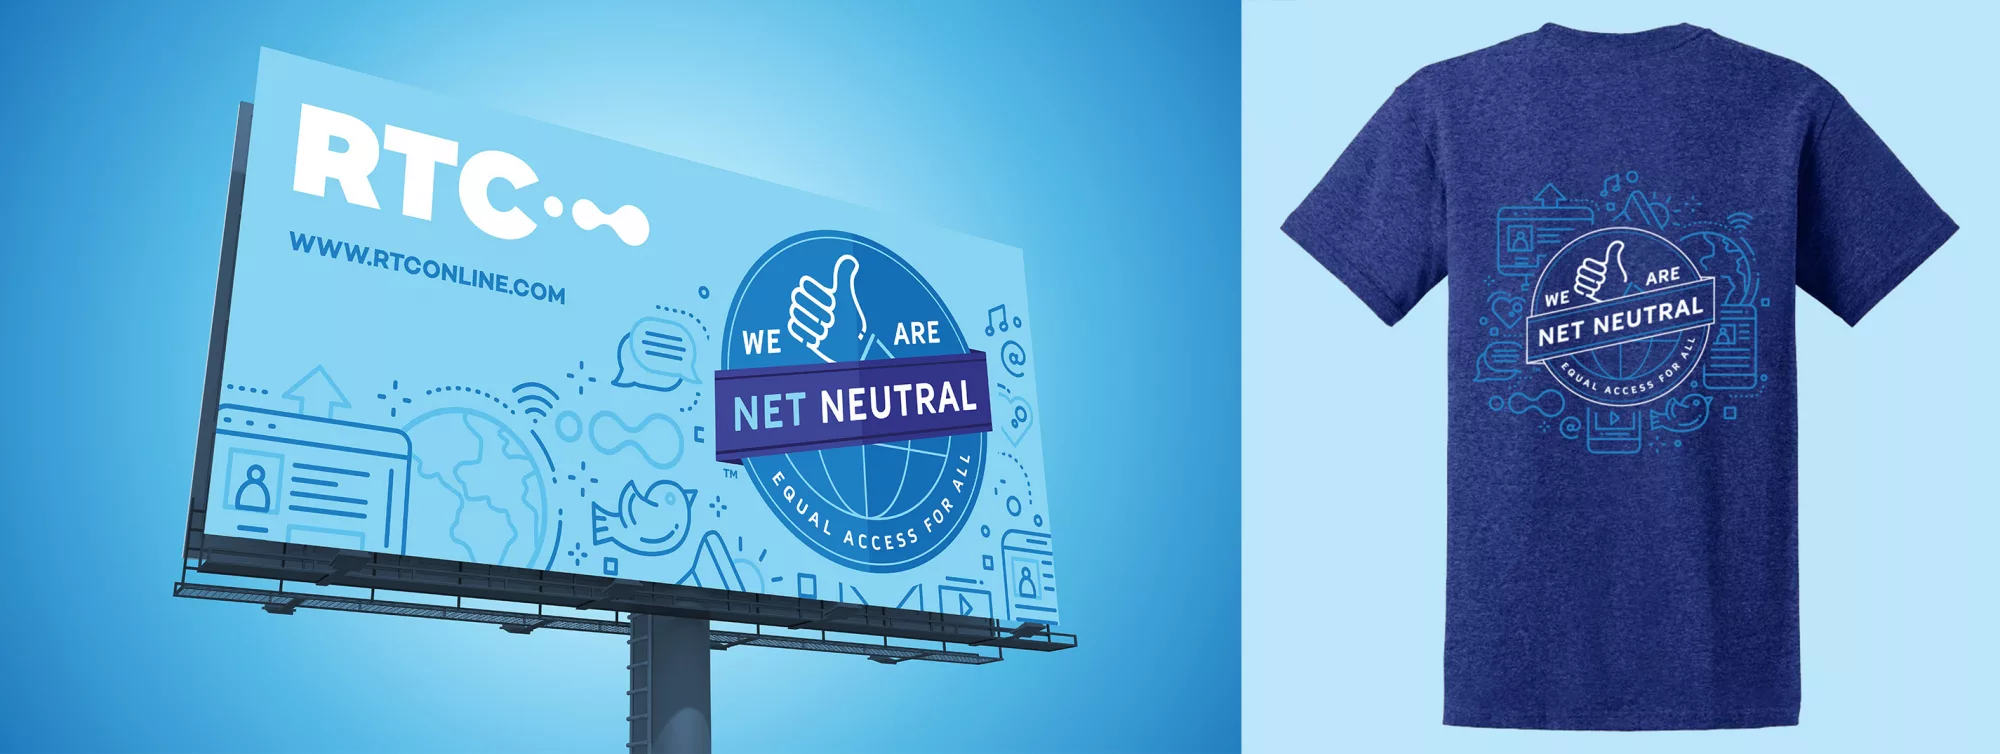 RTC Net Neutral Billboard & Shirt